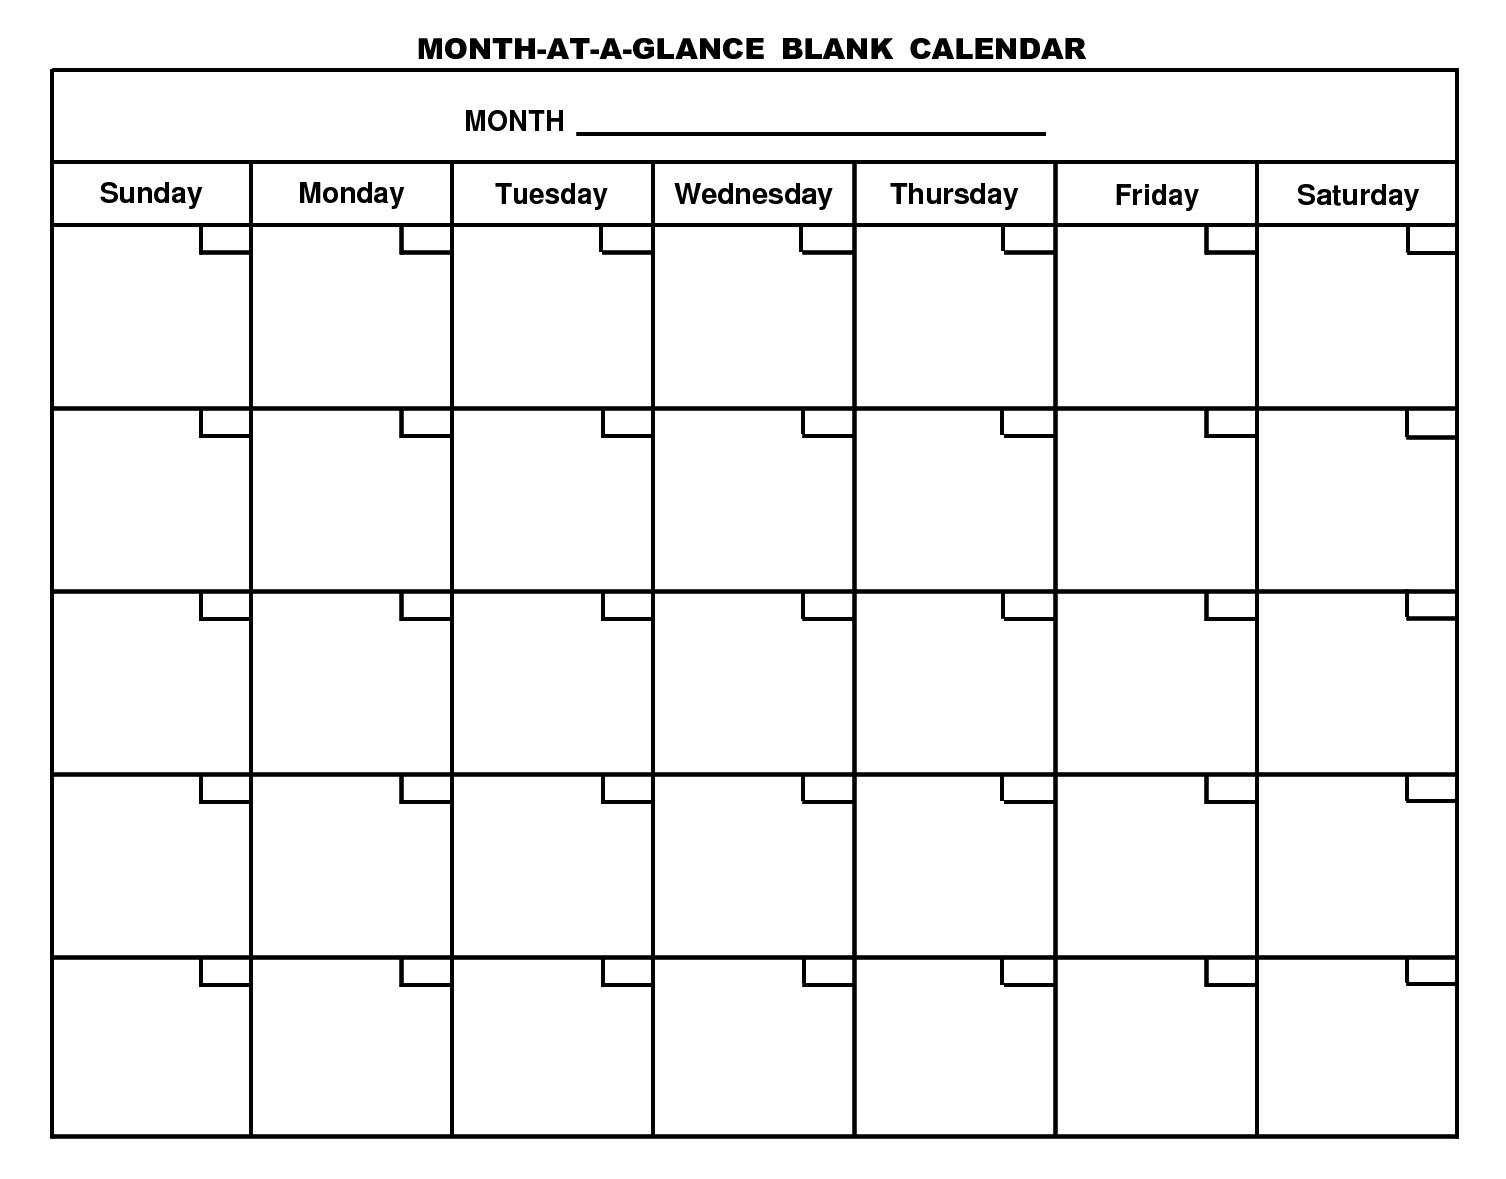 Month At A Glance Blank Calendar Template - Dalep.midnightpig.co Inside Blank Calender Template